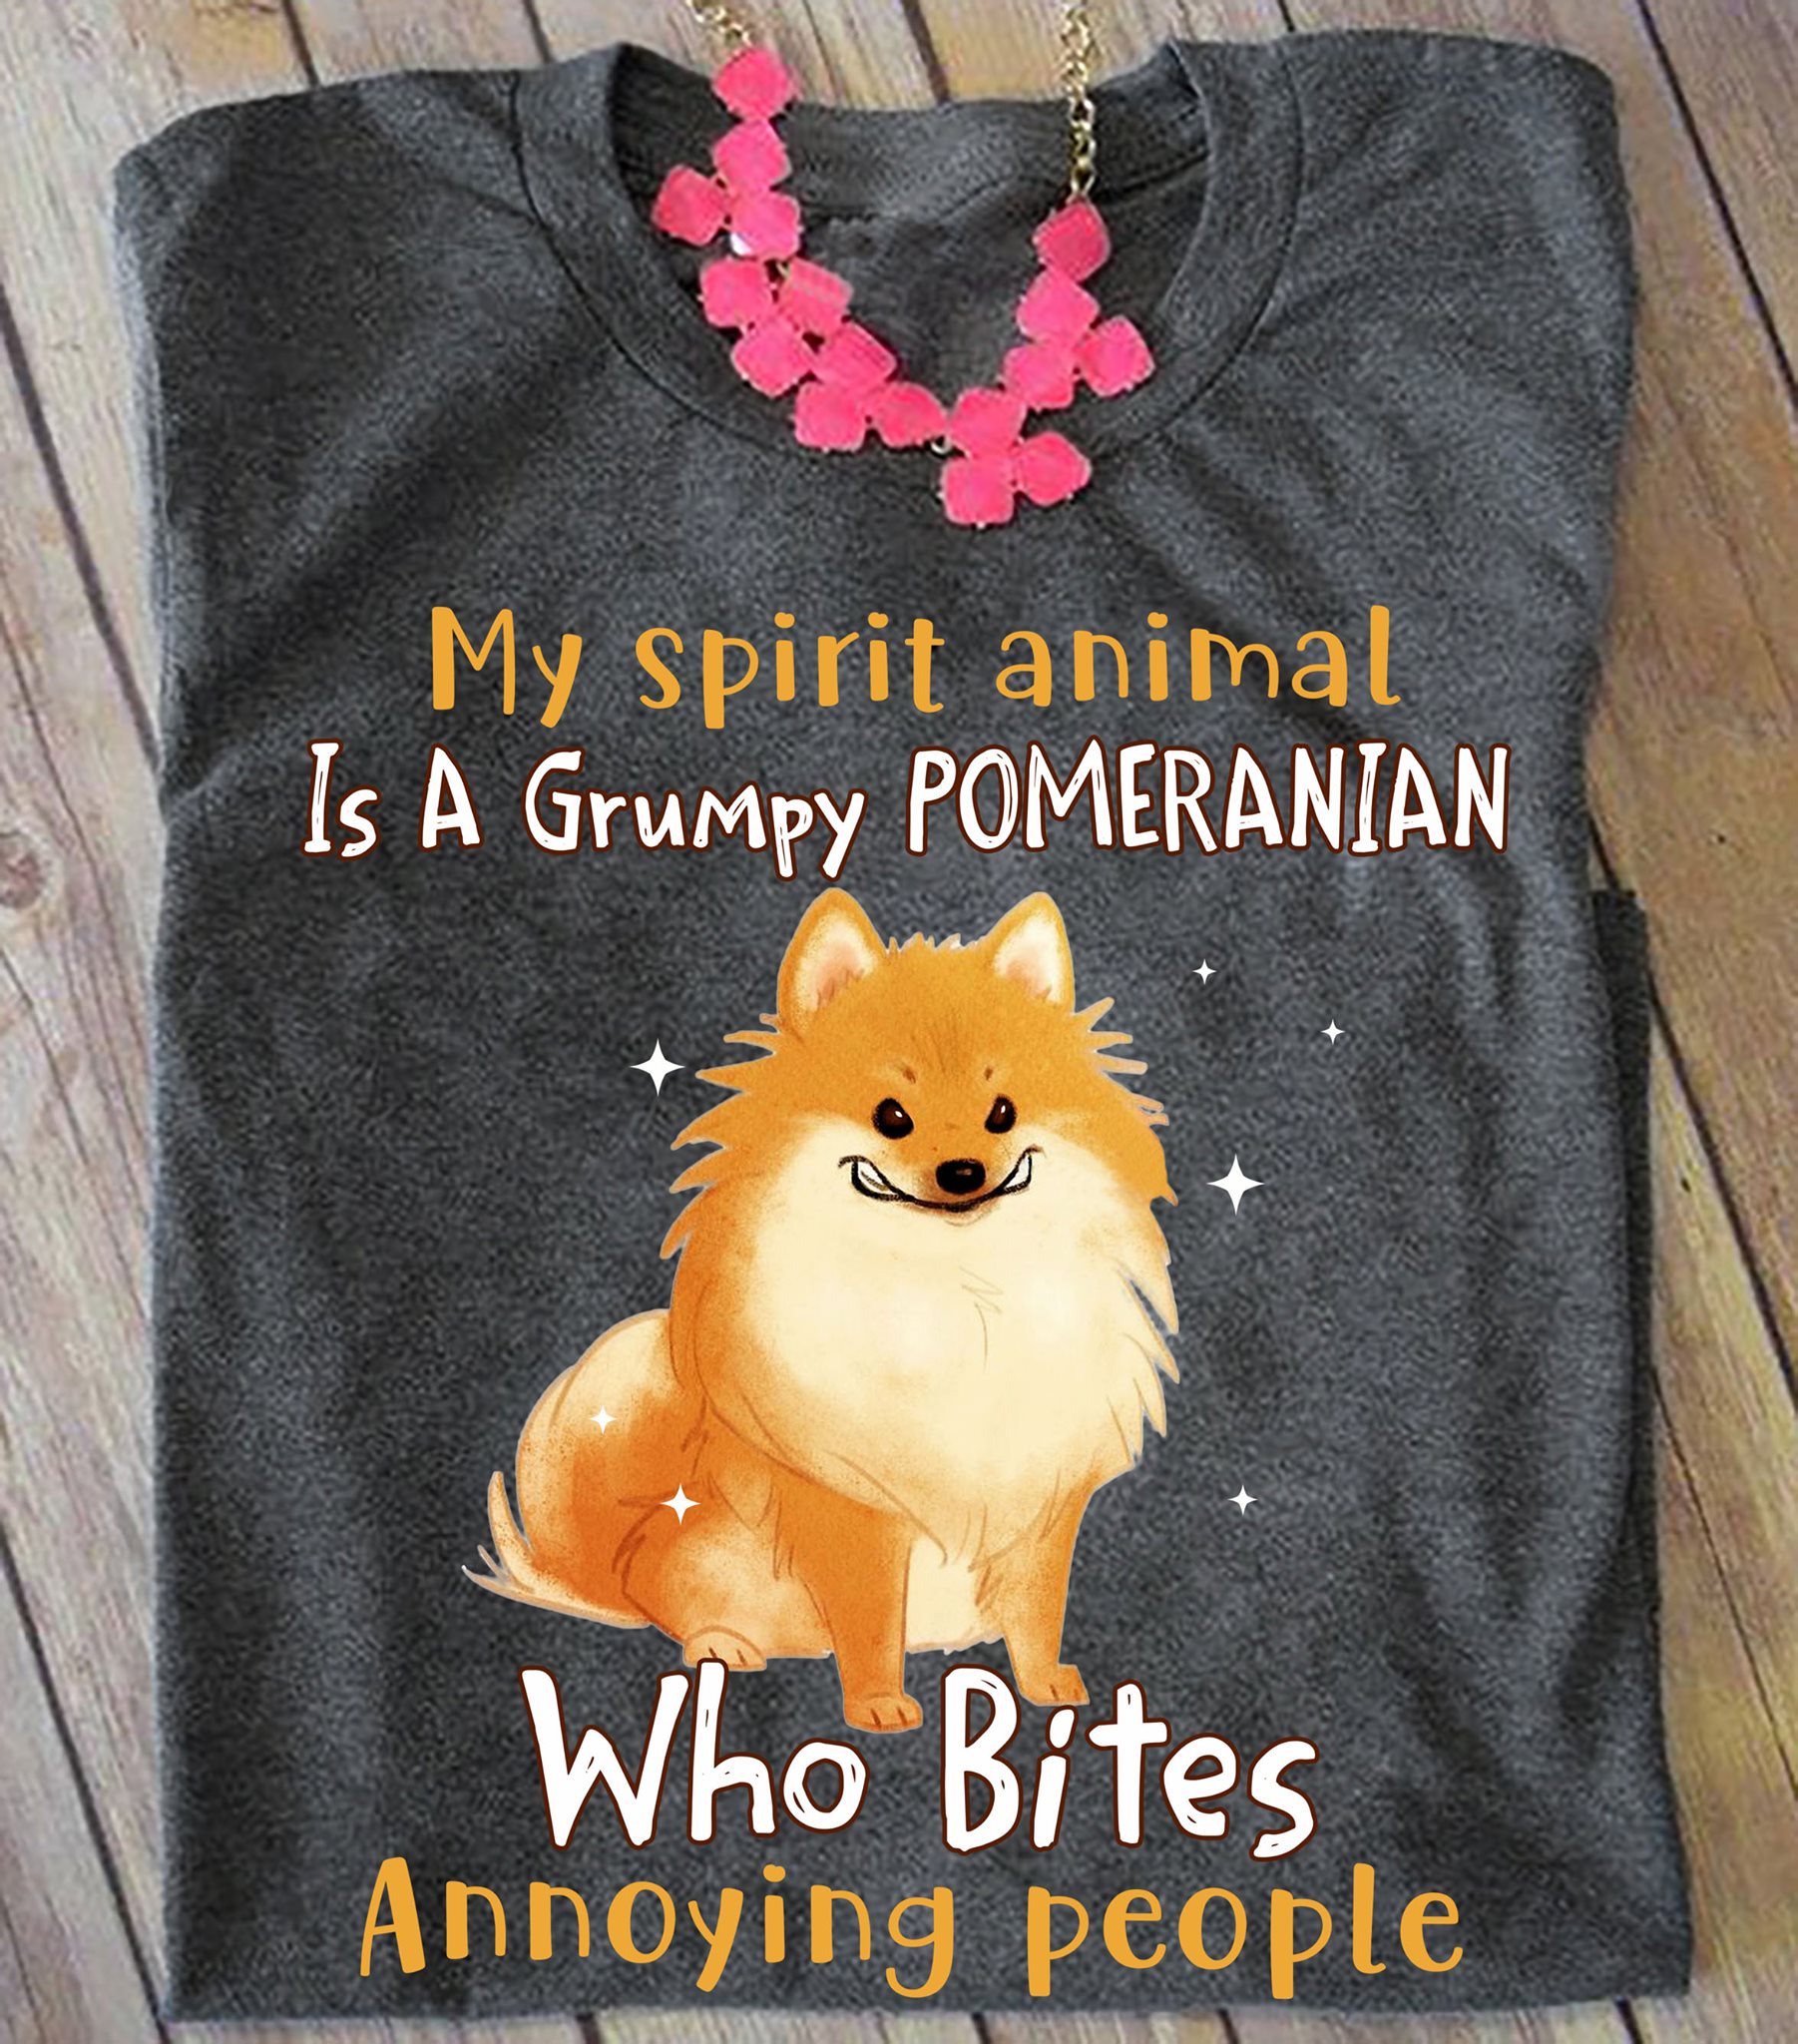 My spirit animal is a grumpy Pomeranian who bites annoying people